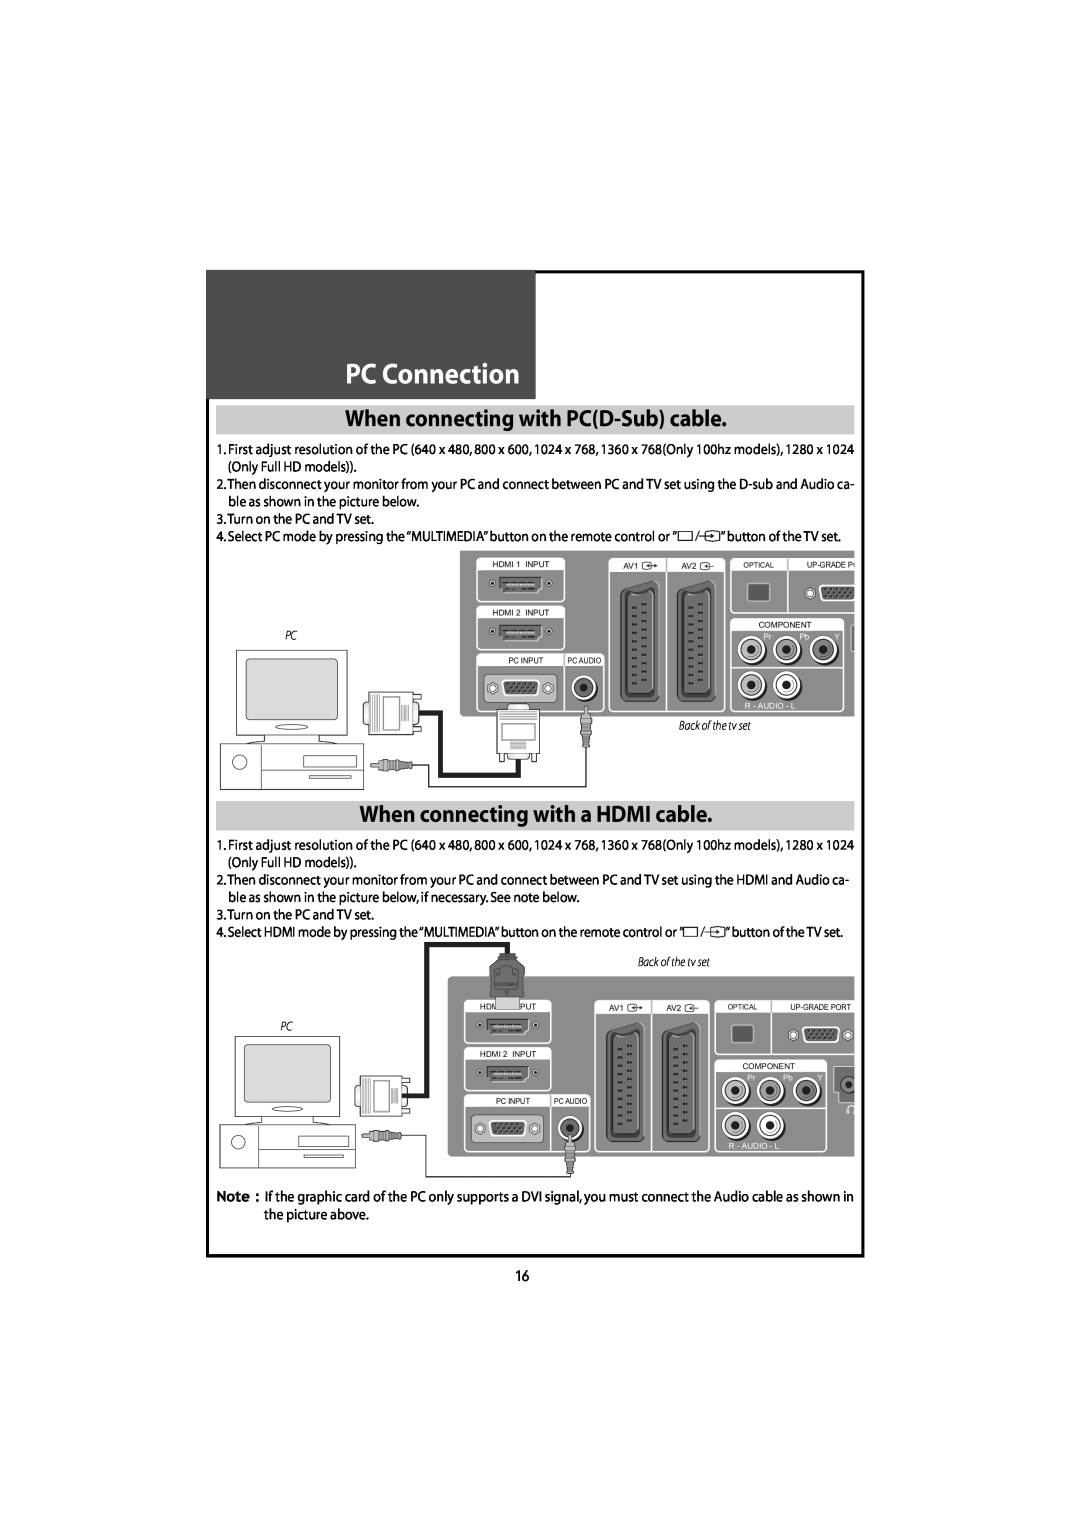 Daewoo DLT-42U1/G1FH, DLT-46U1FH PC Connection, When connecting with PCD-Sub cable, When connecting with a HDMI cable 